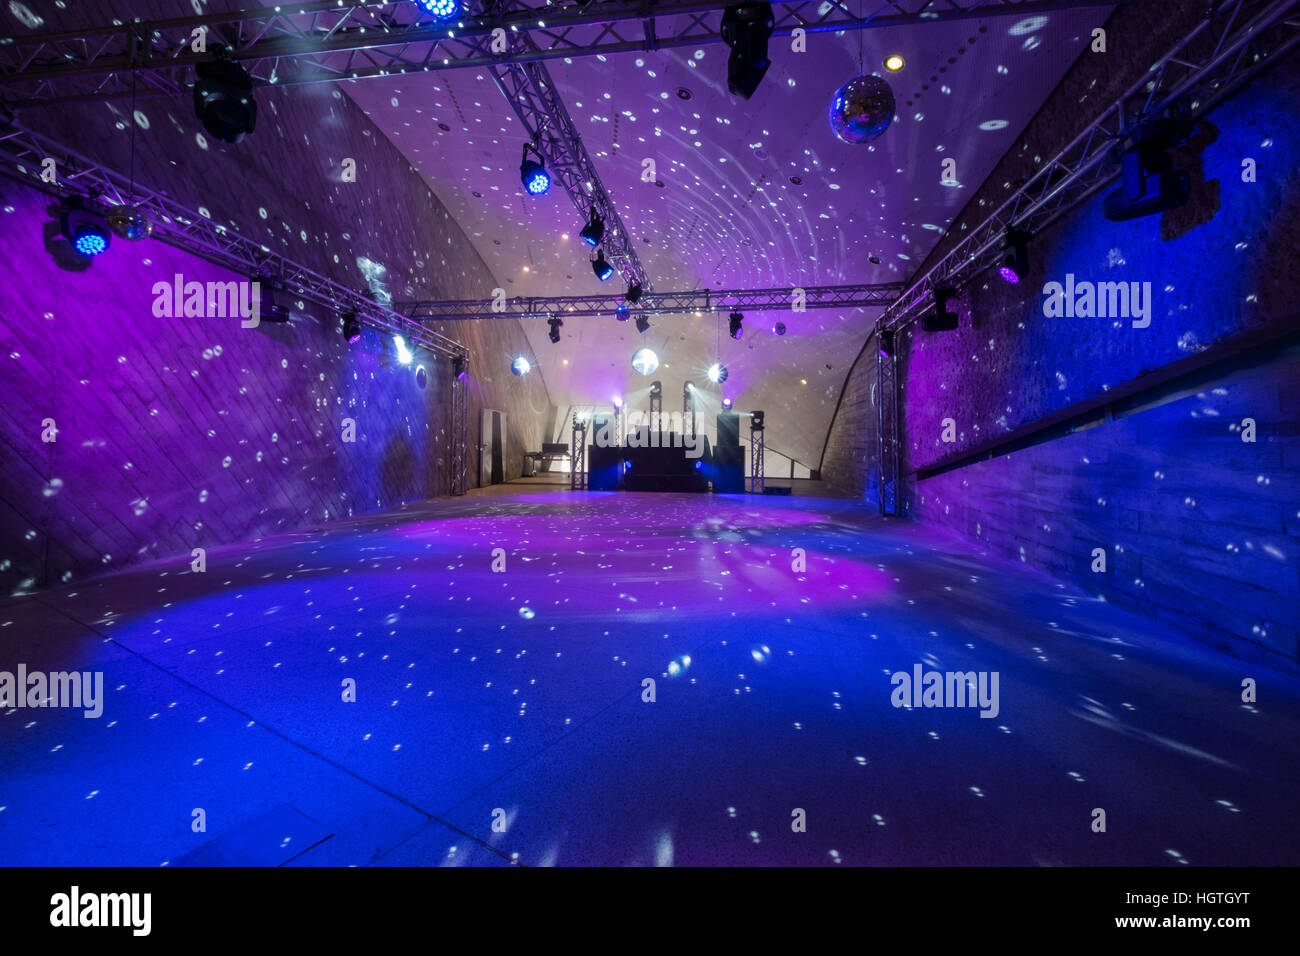 Empty disco dance floor with led lighting and mirror balls Stock Photo